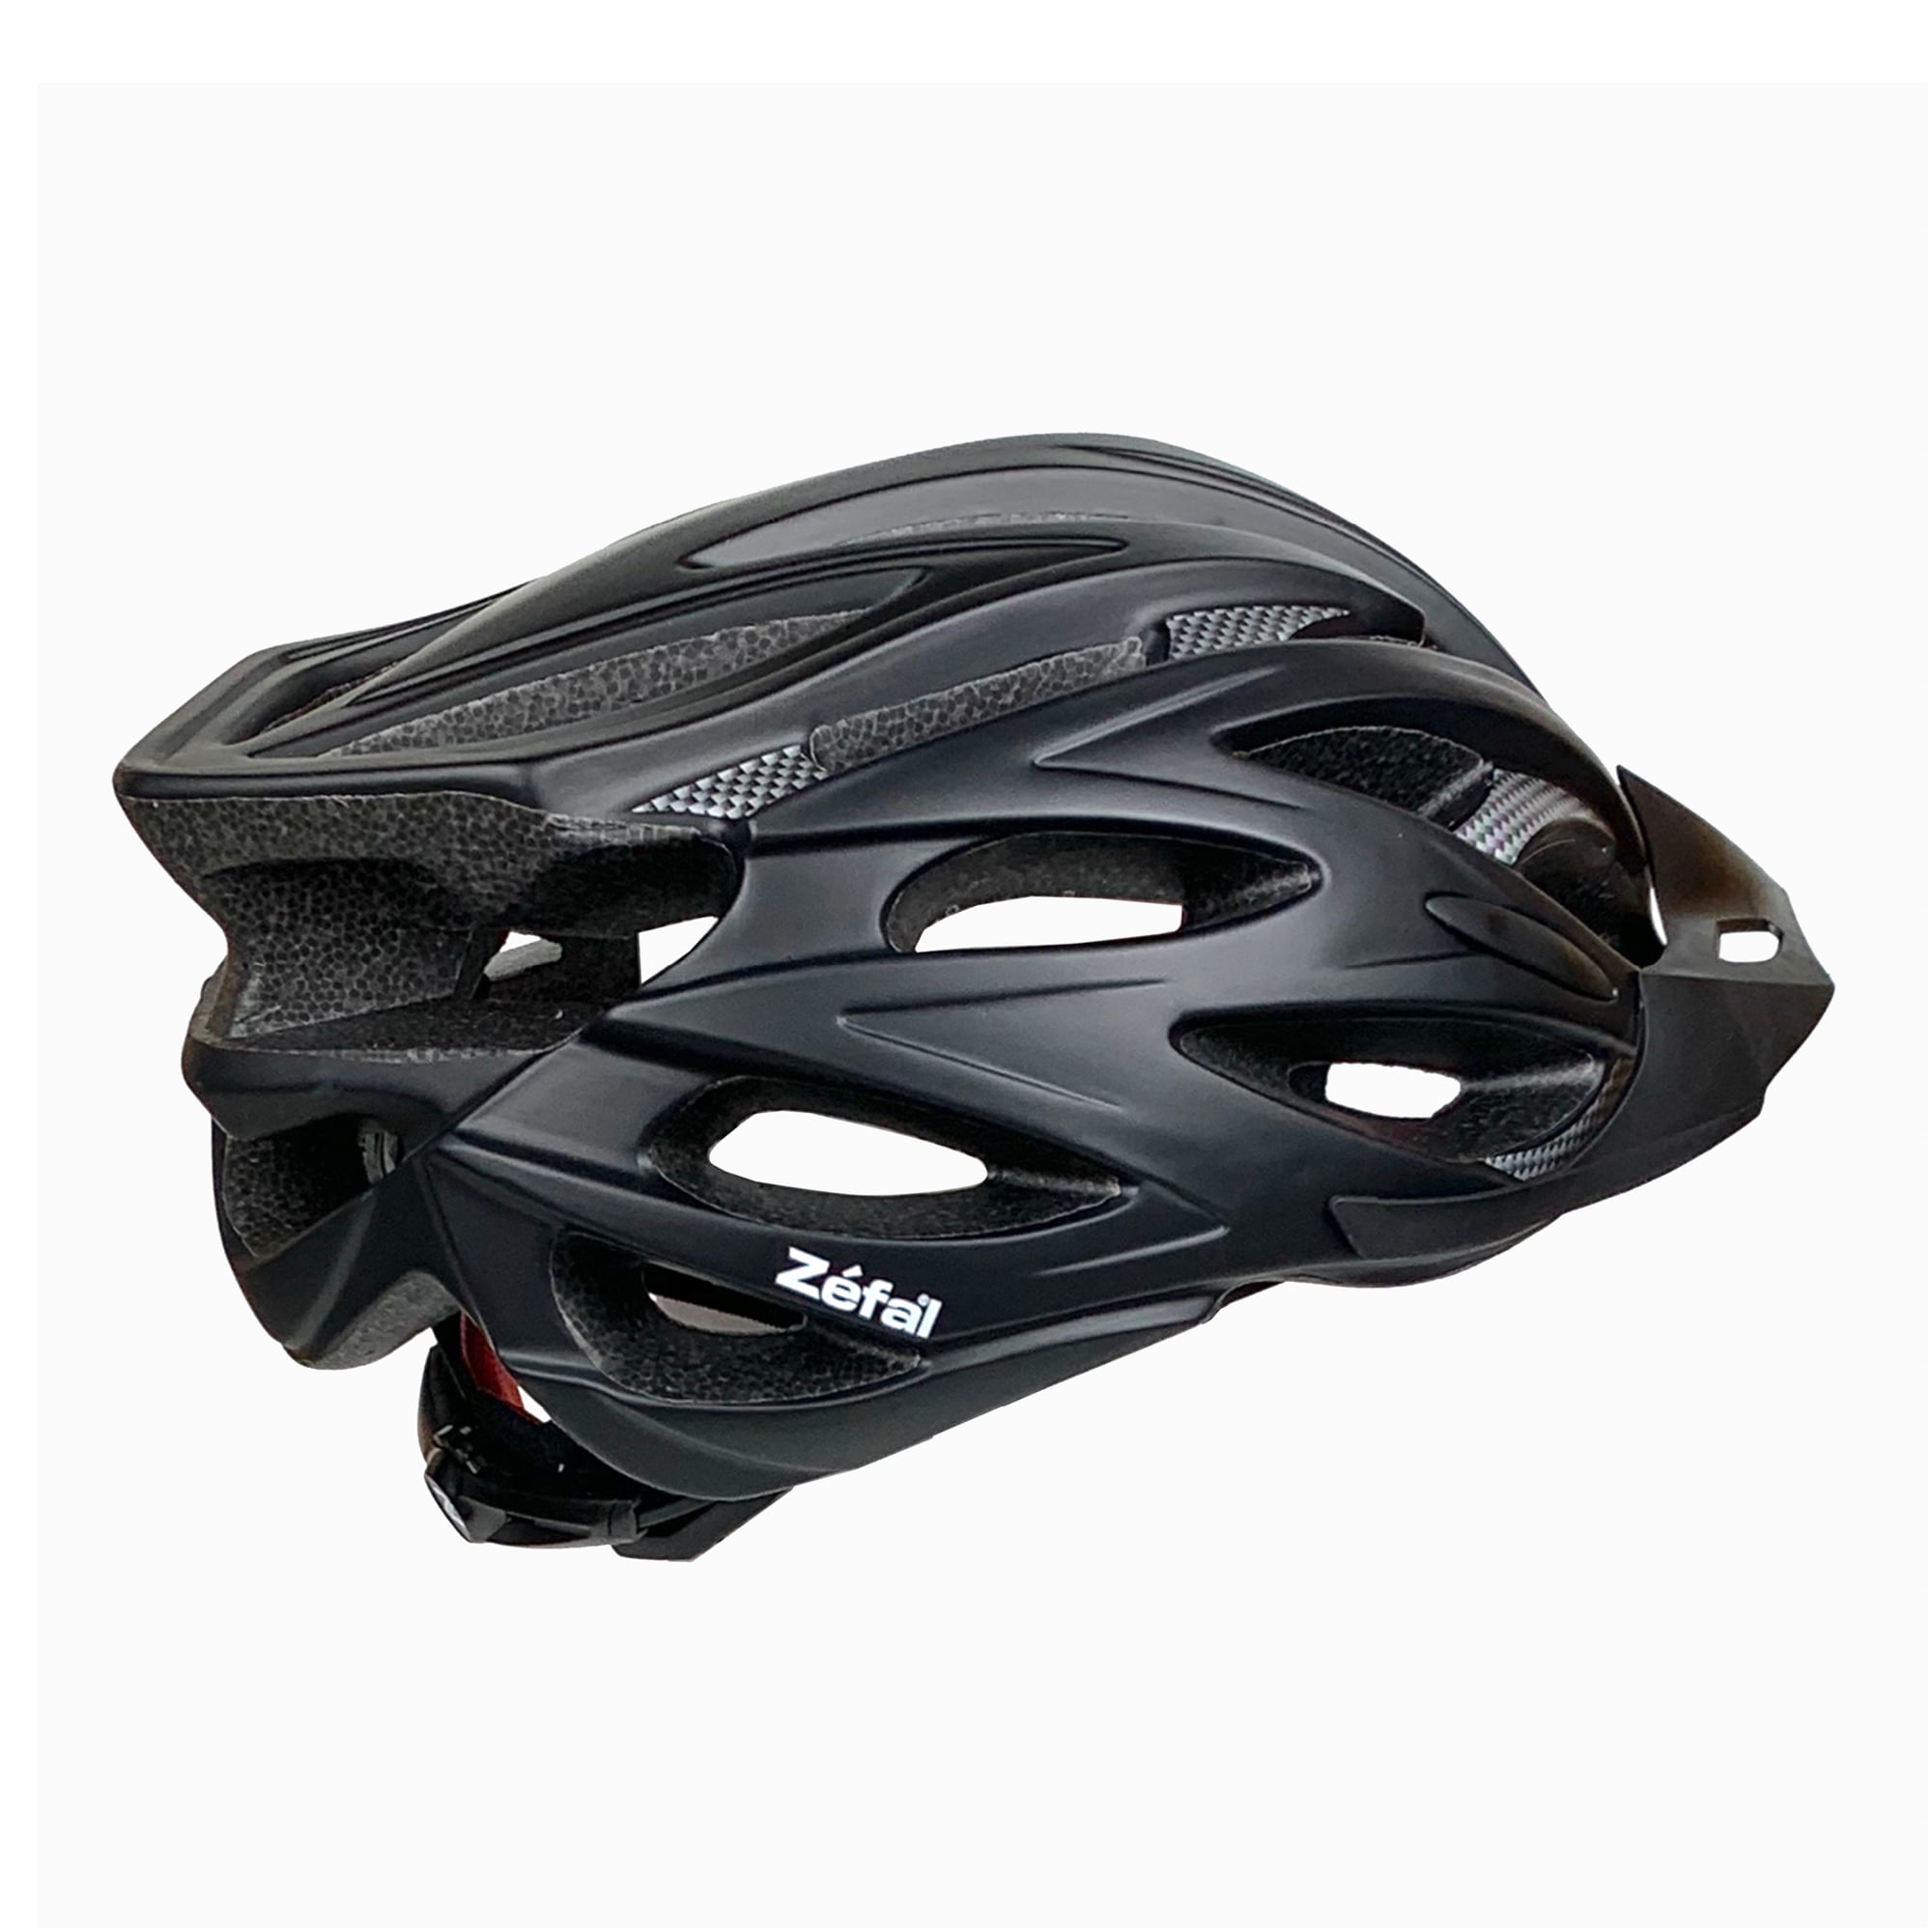 handelaar Veronderstelling verdediging Zefal Adult Black Bike Helmet (Universal Adjustment, 24 Vents, Ages 14+) -  Walmart.com